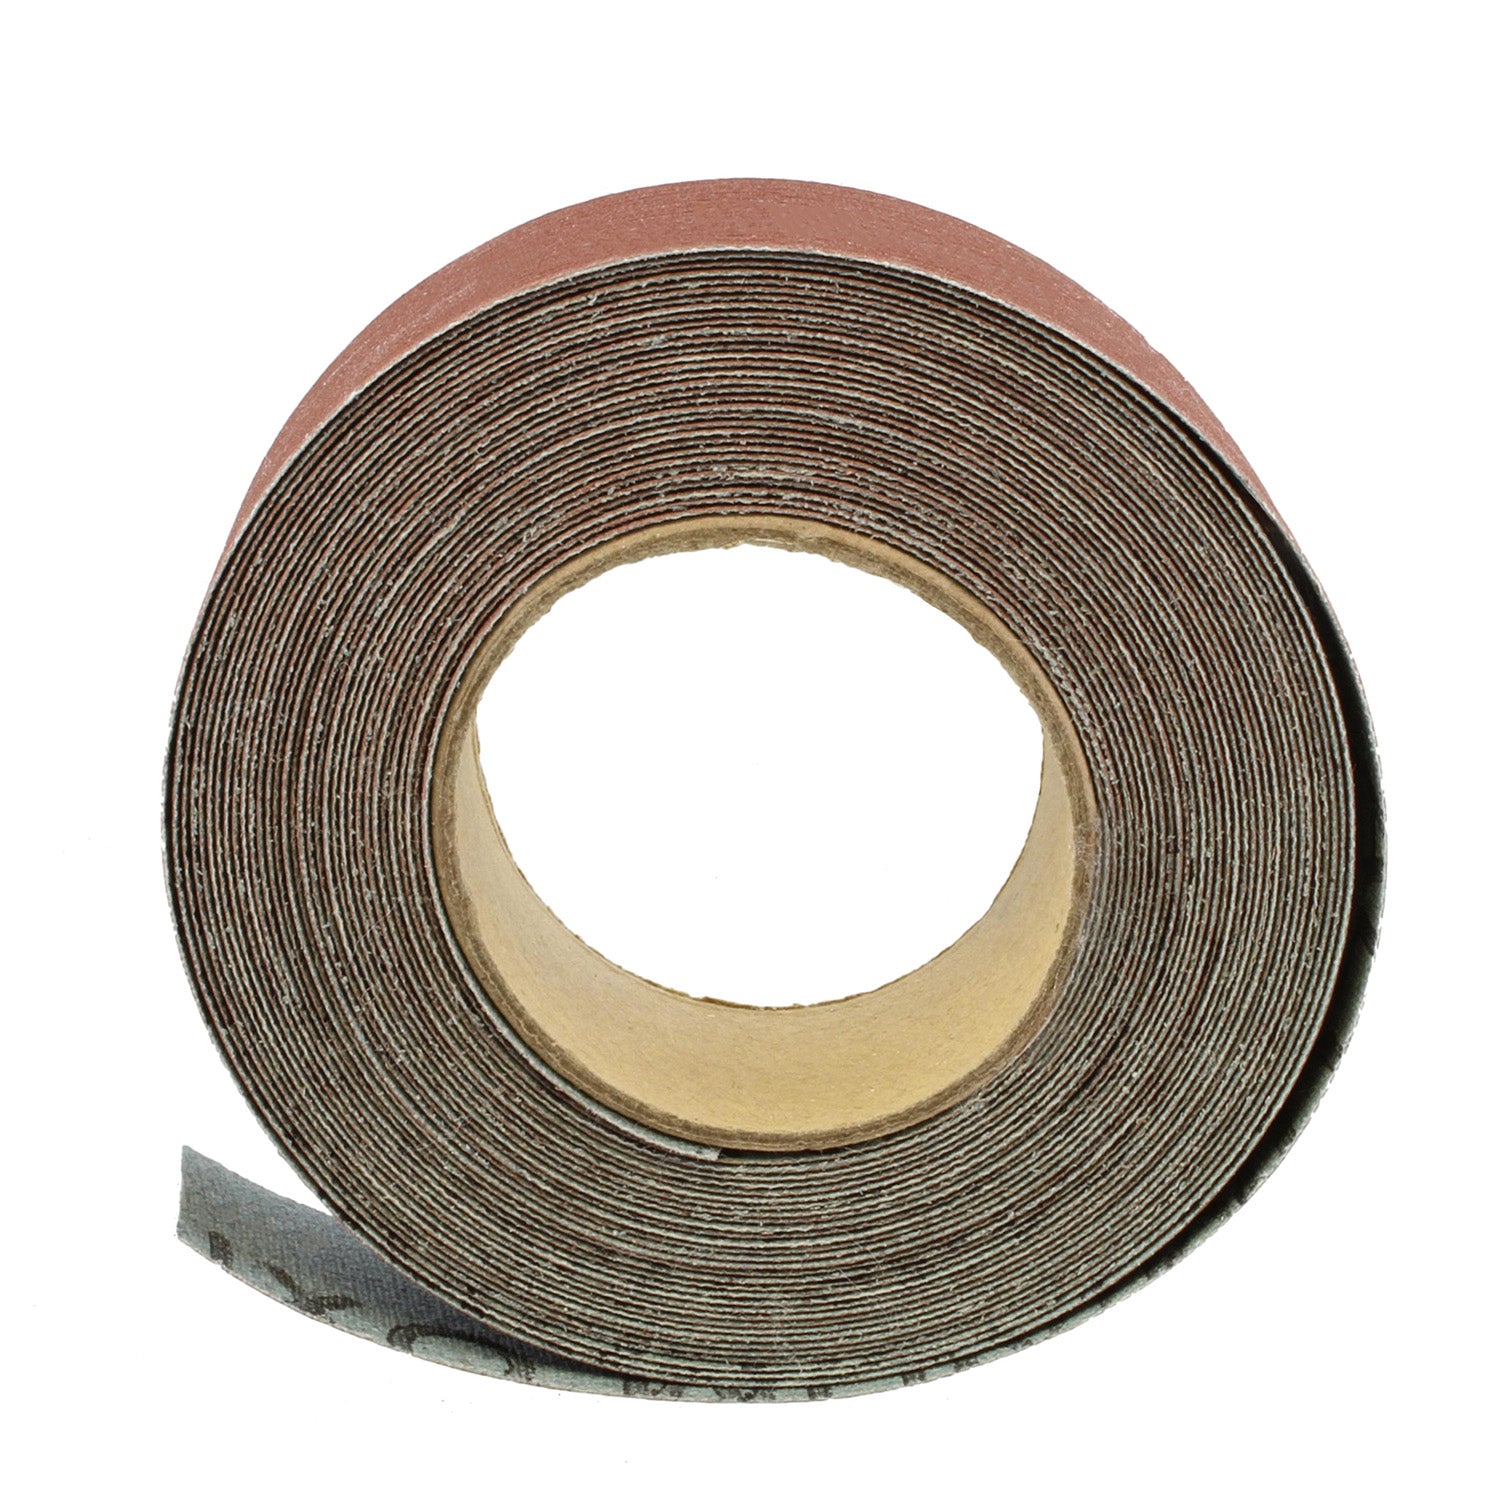 Automotive Sand Paper Abrasive Paper Sandpaper for Wood 600 Grit Roll